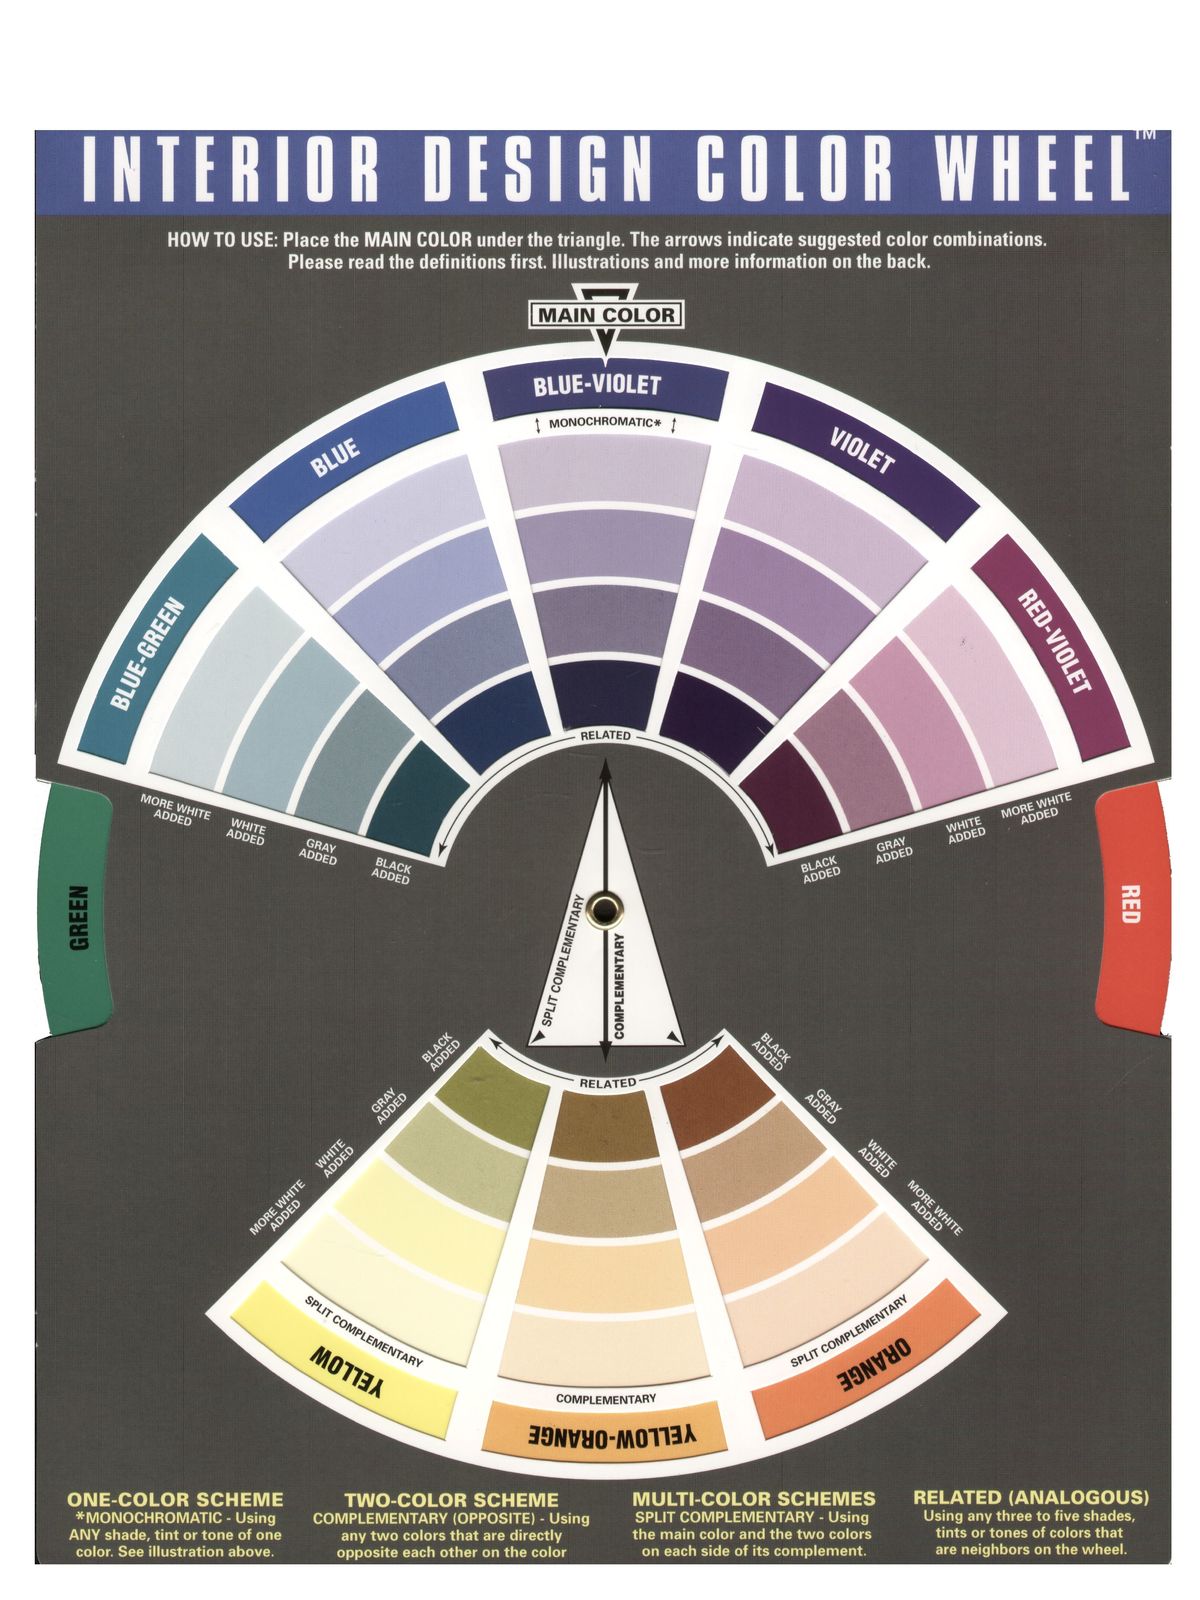 Interior Design Wheel Interior Design Color Wheel